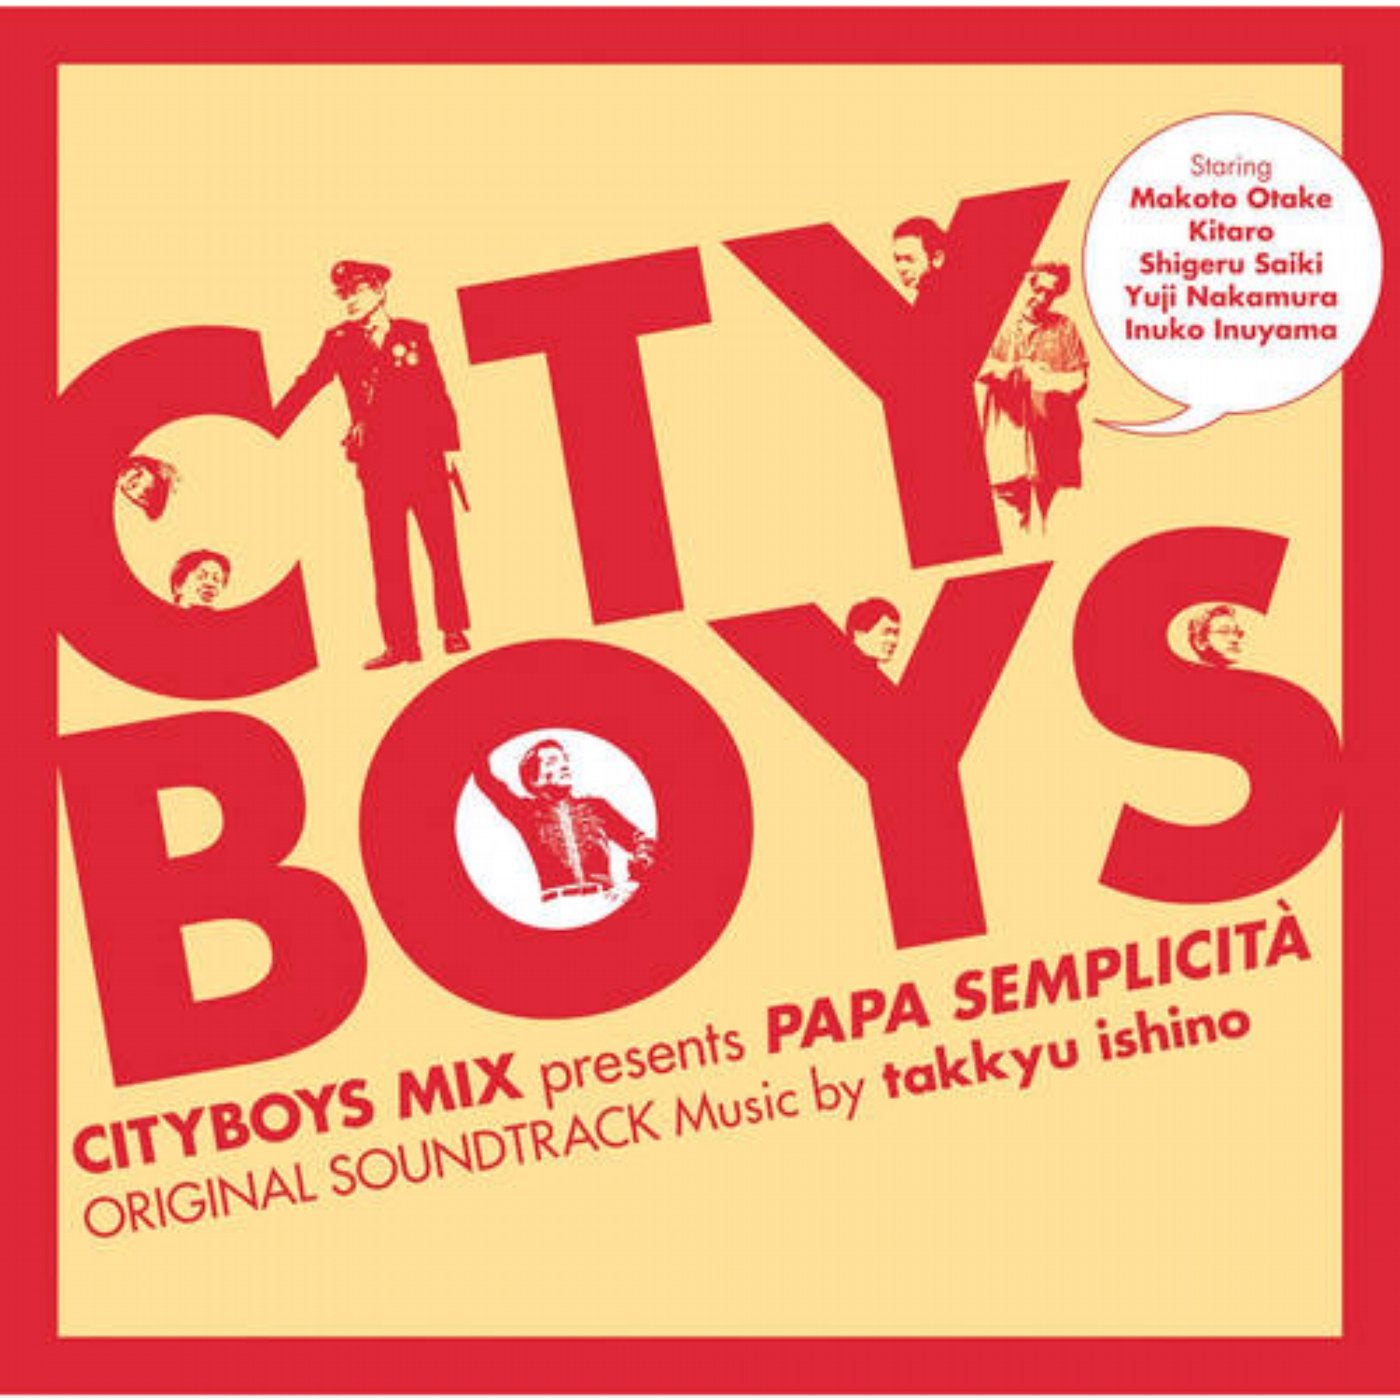 Cityboys Mix Presents Papa Semplicita (Original Soundtrack) Music by Takkyu Ishino